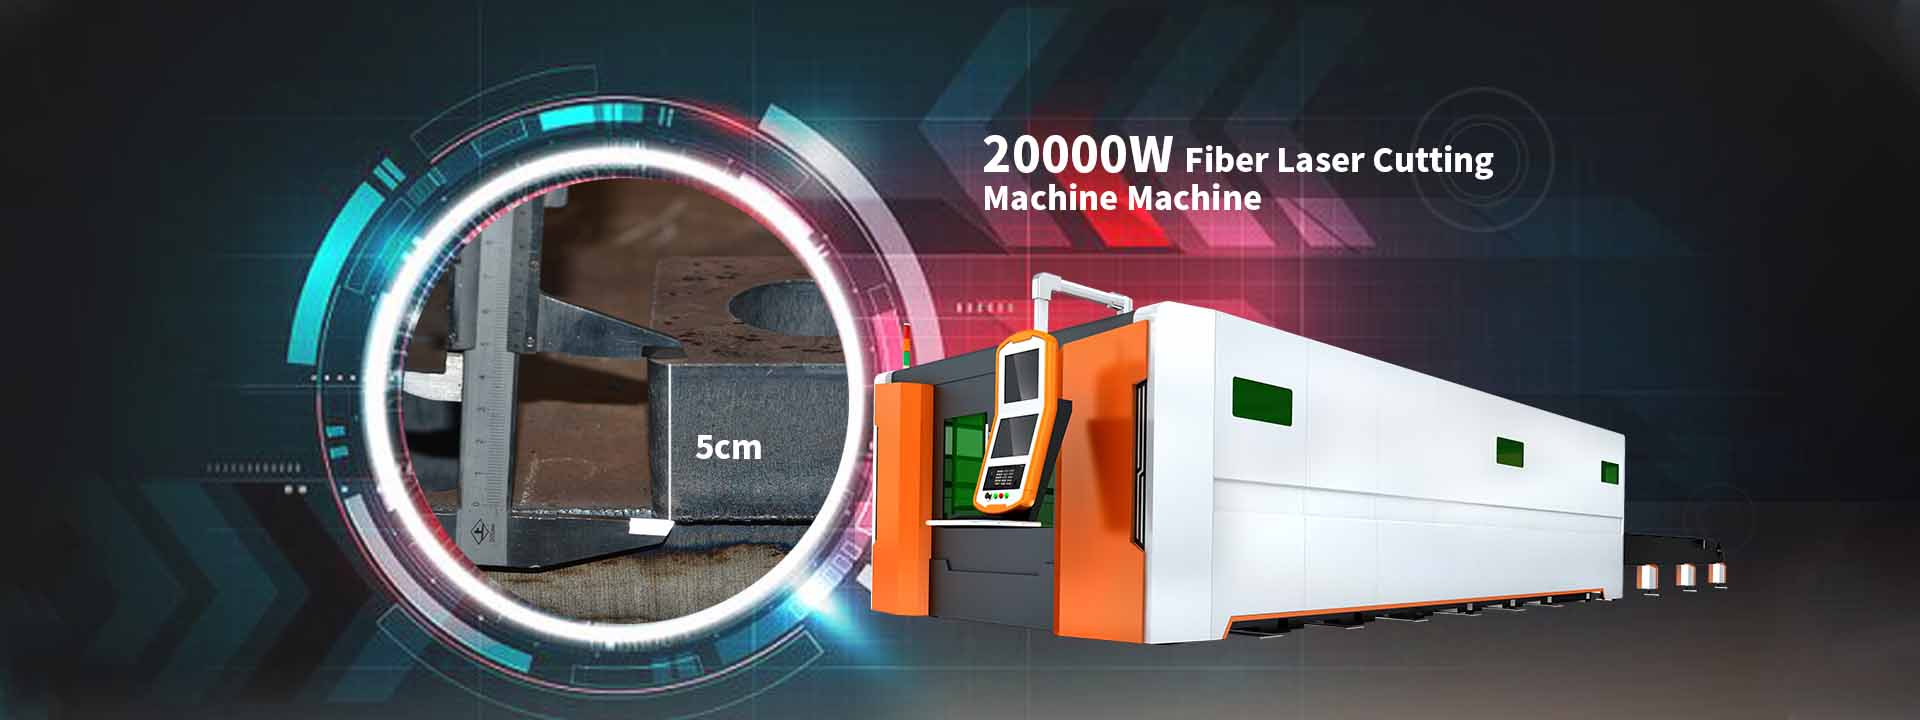 Laser cutting application in lighting industry - Goldenlaser